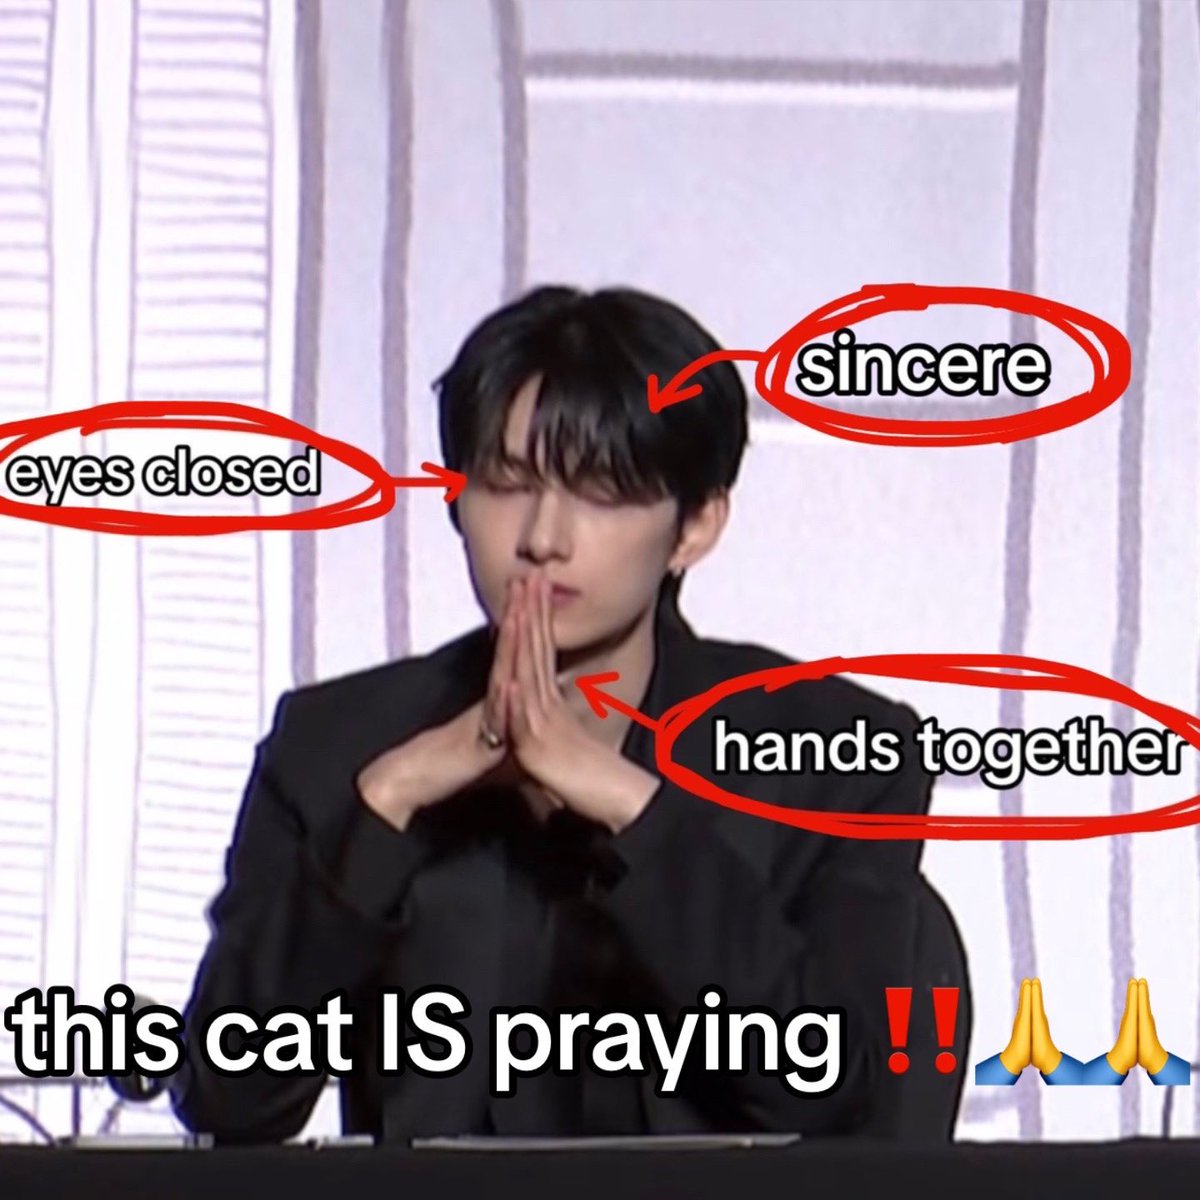 god pls give junhui whatever he’s praying for